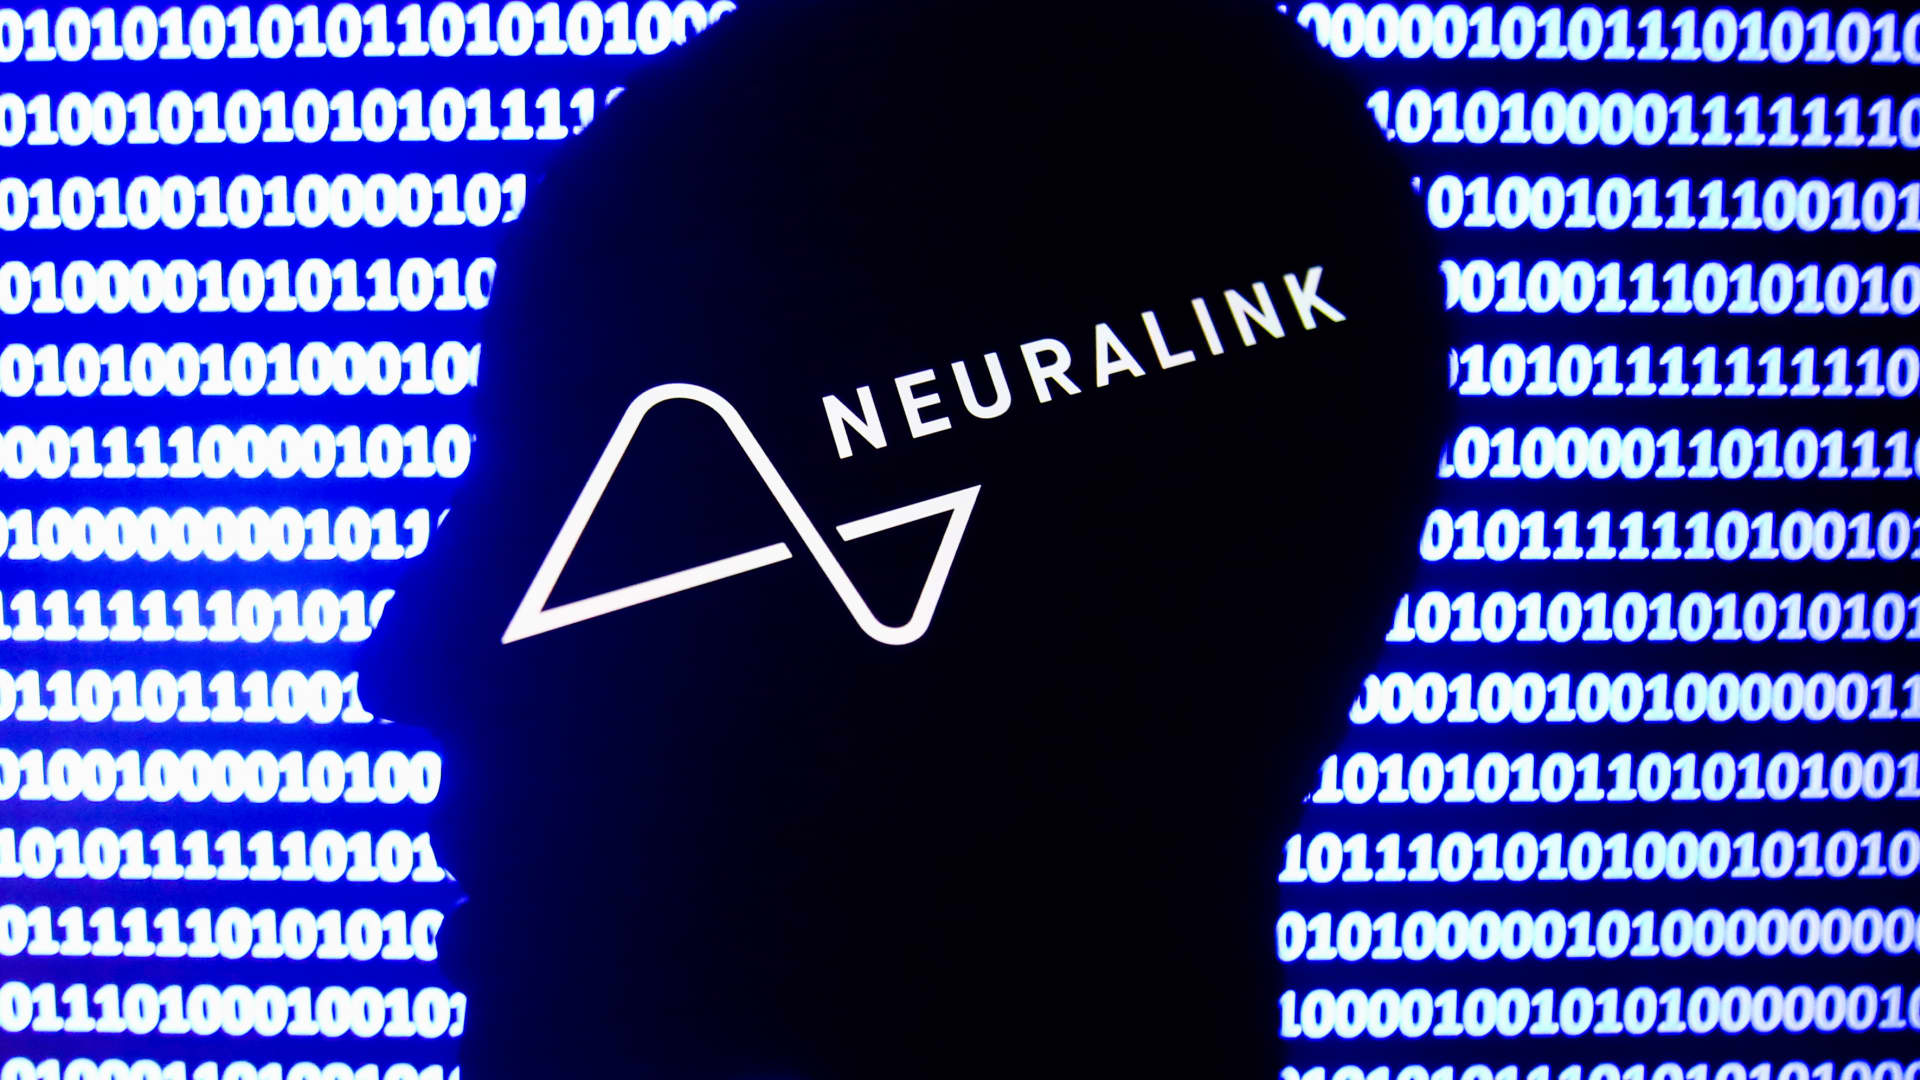 Elon Musk’s mind implant firm Neuralink announces FDA approval of in-human scientific seek